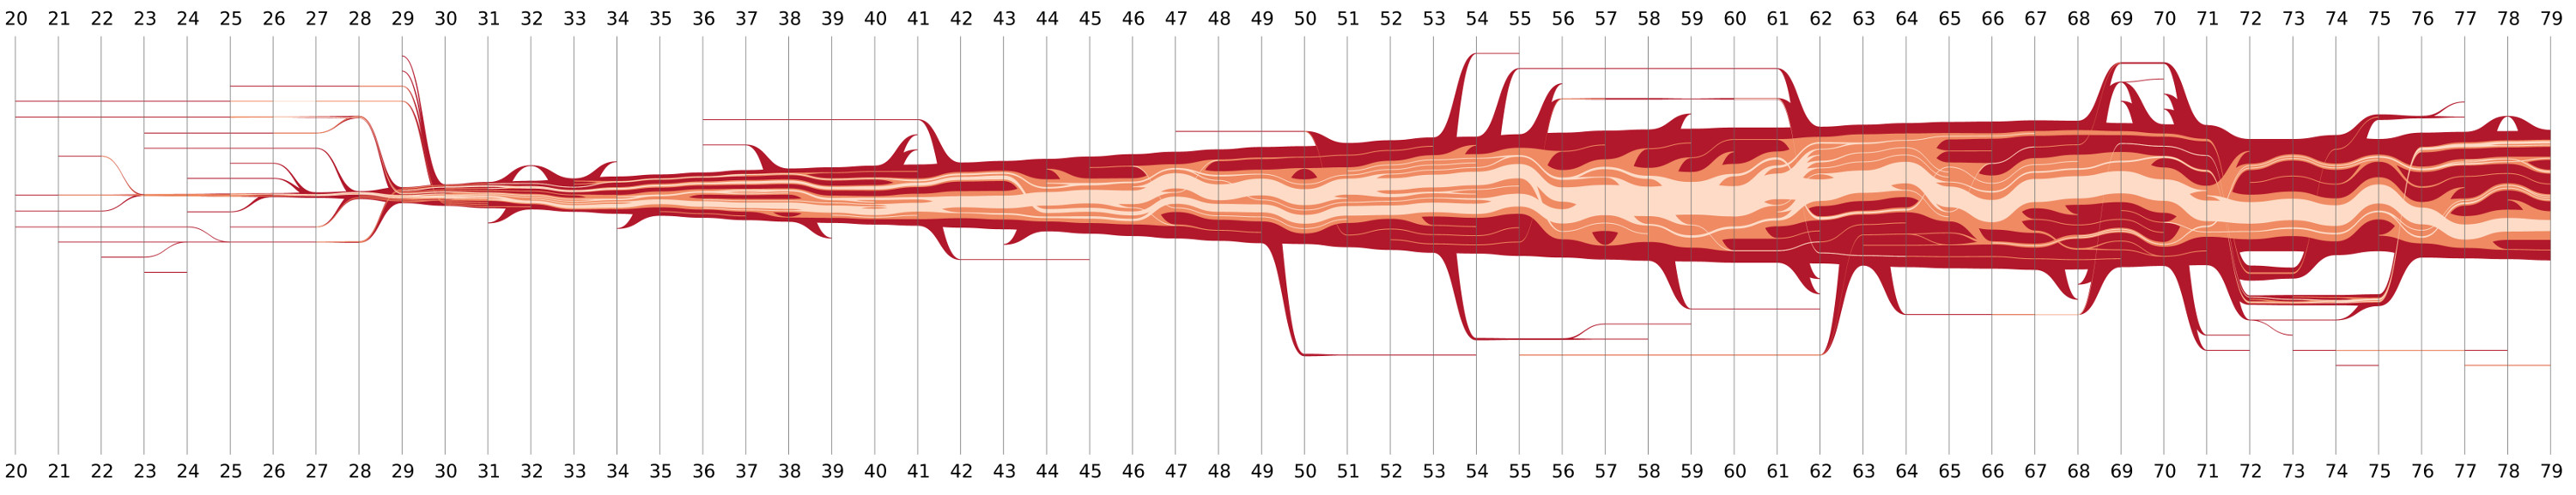 Nested Tracking Graph for the Viscous Finger Dataset